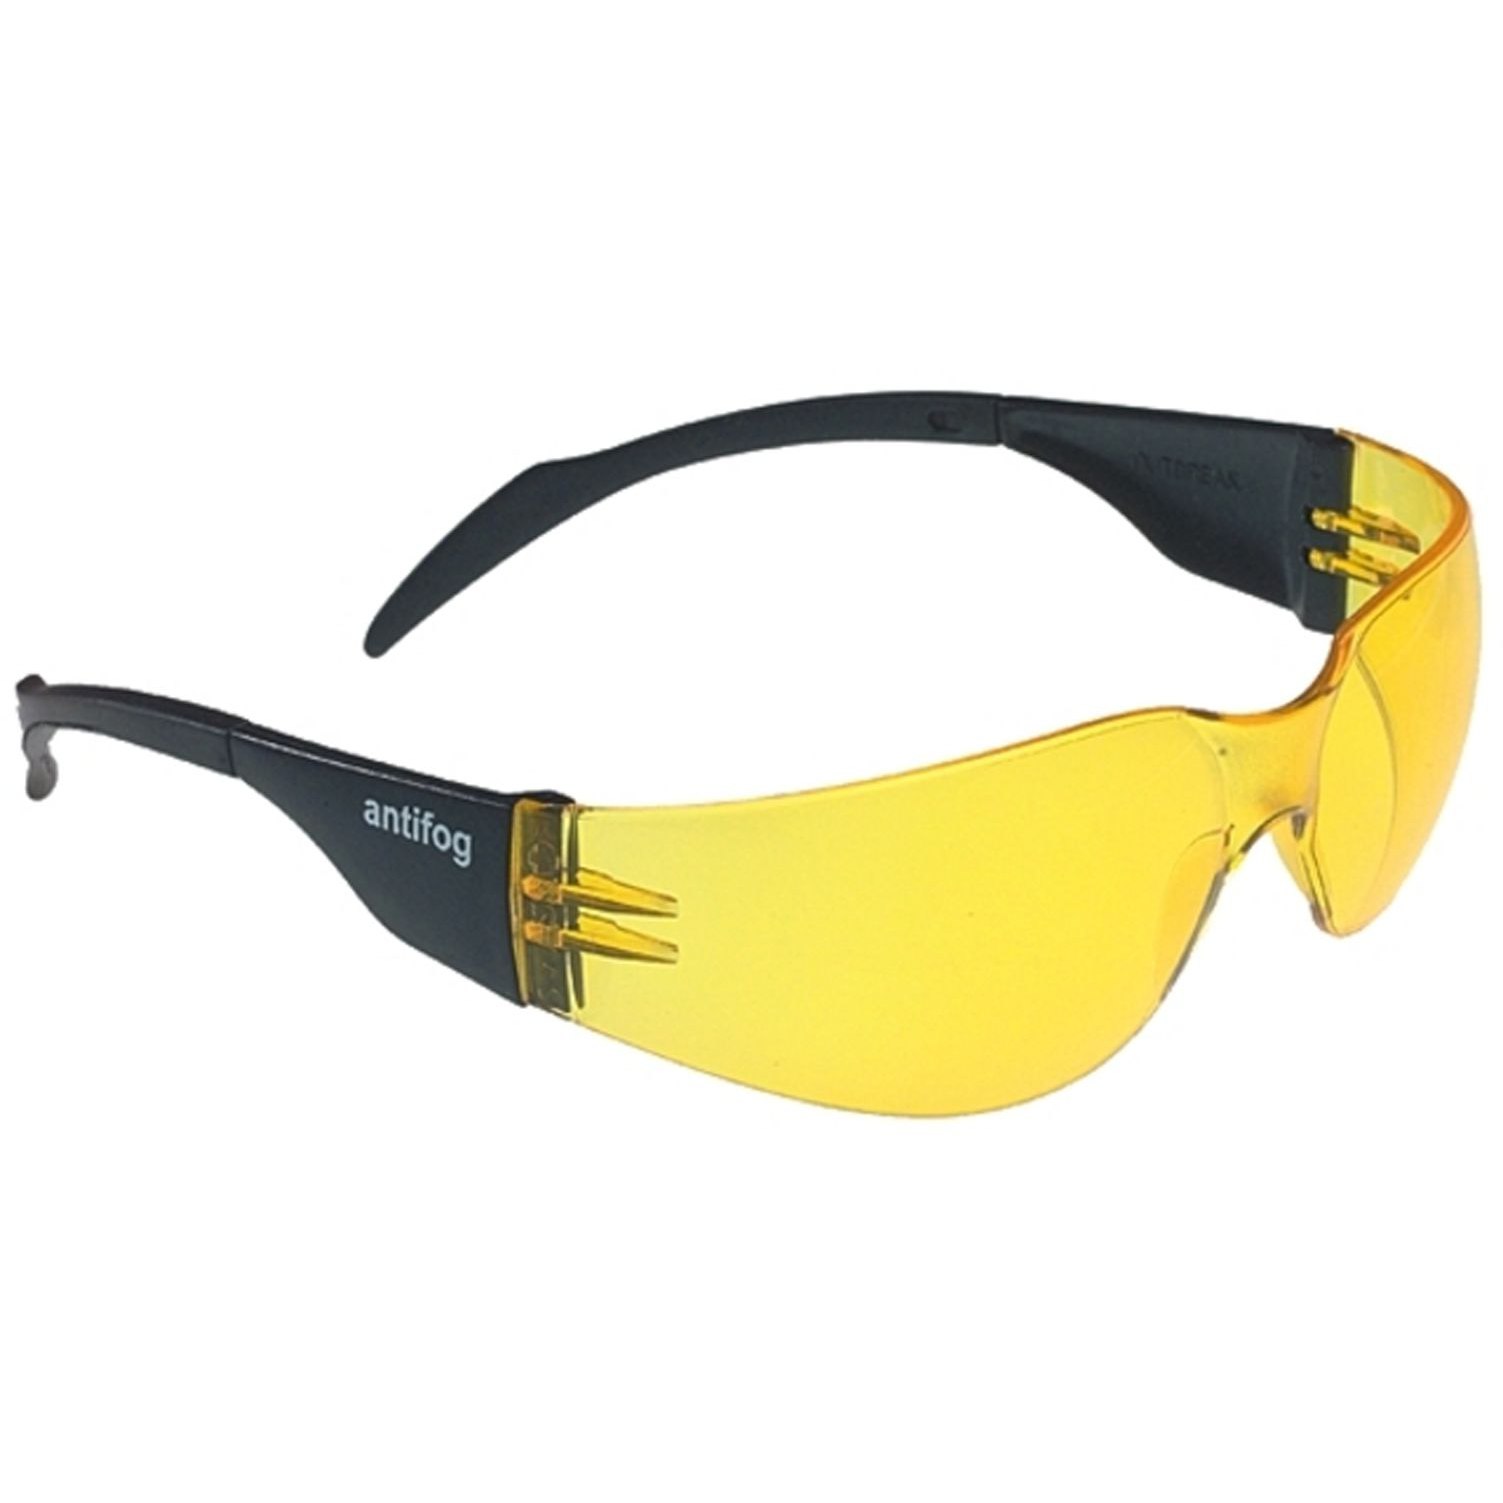 Productfoto van Swiss Eye Outbreak Glasses 14004 - Black - Yellow